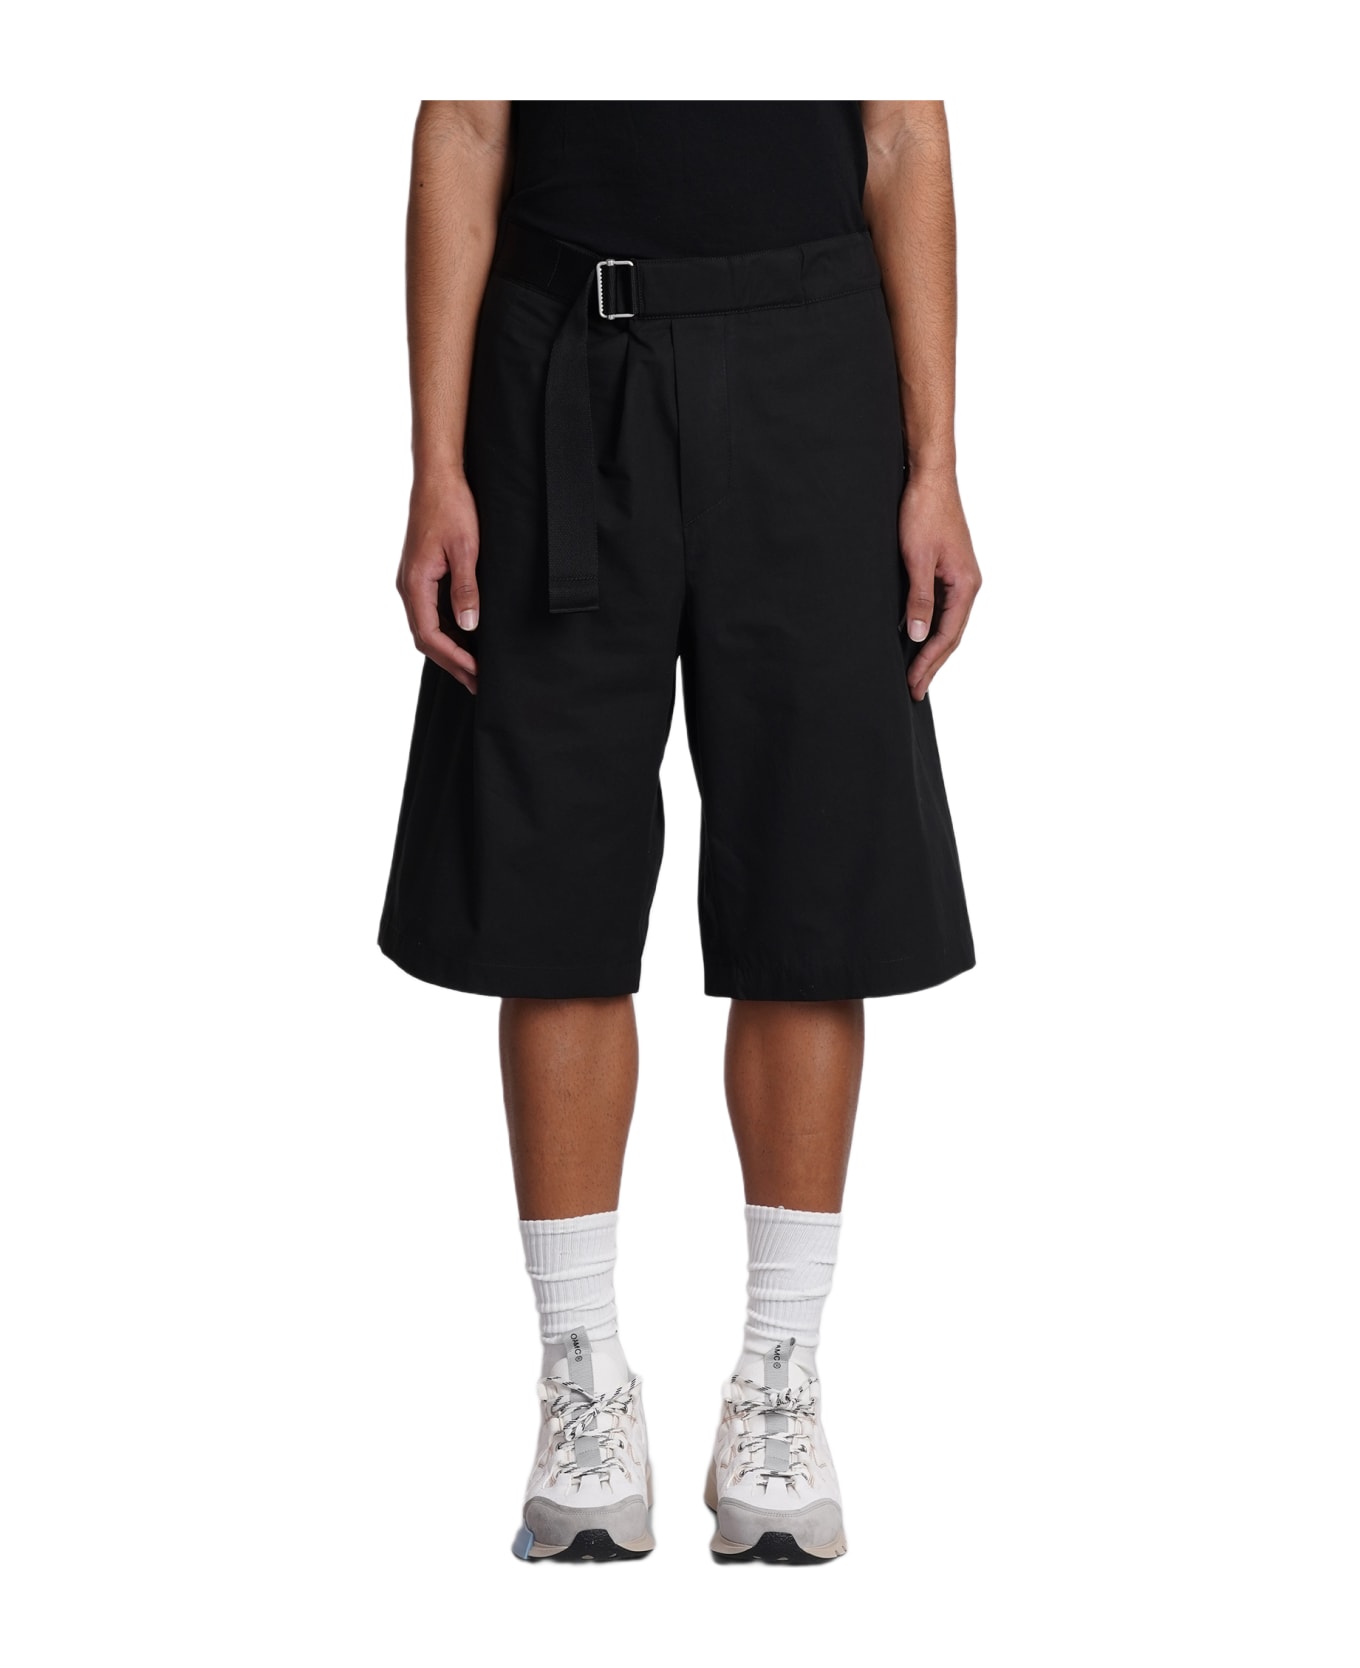 OAMC Shorts In Black Cotton - black ショートパンツ